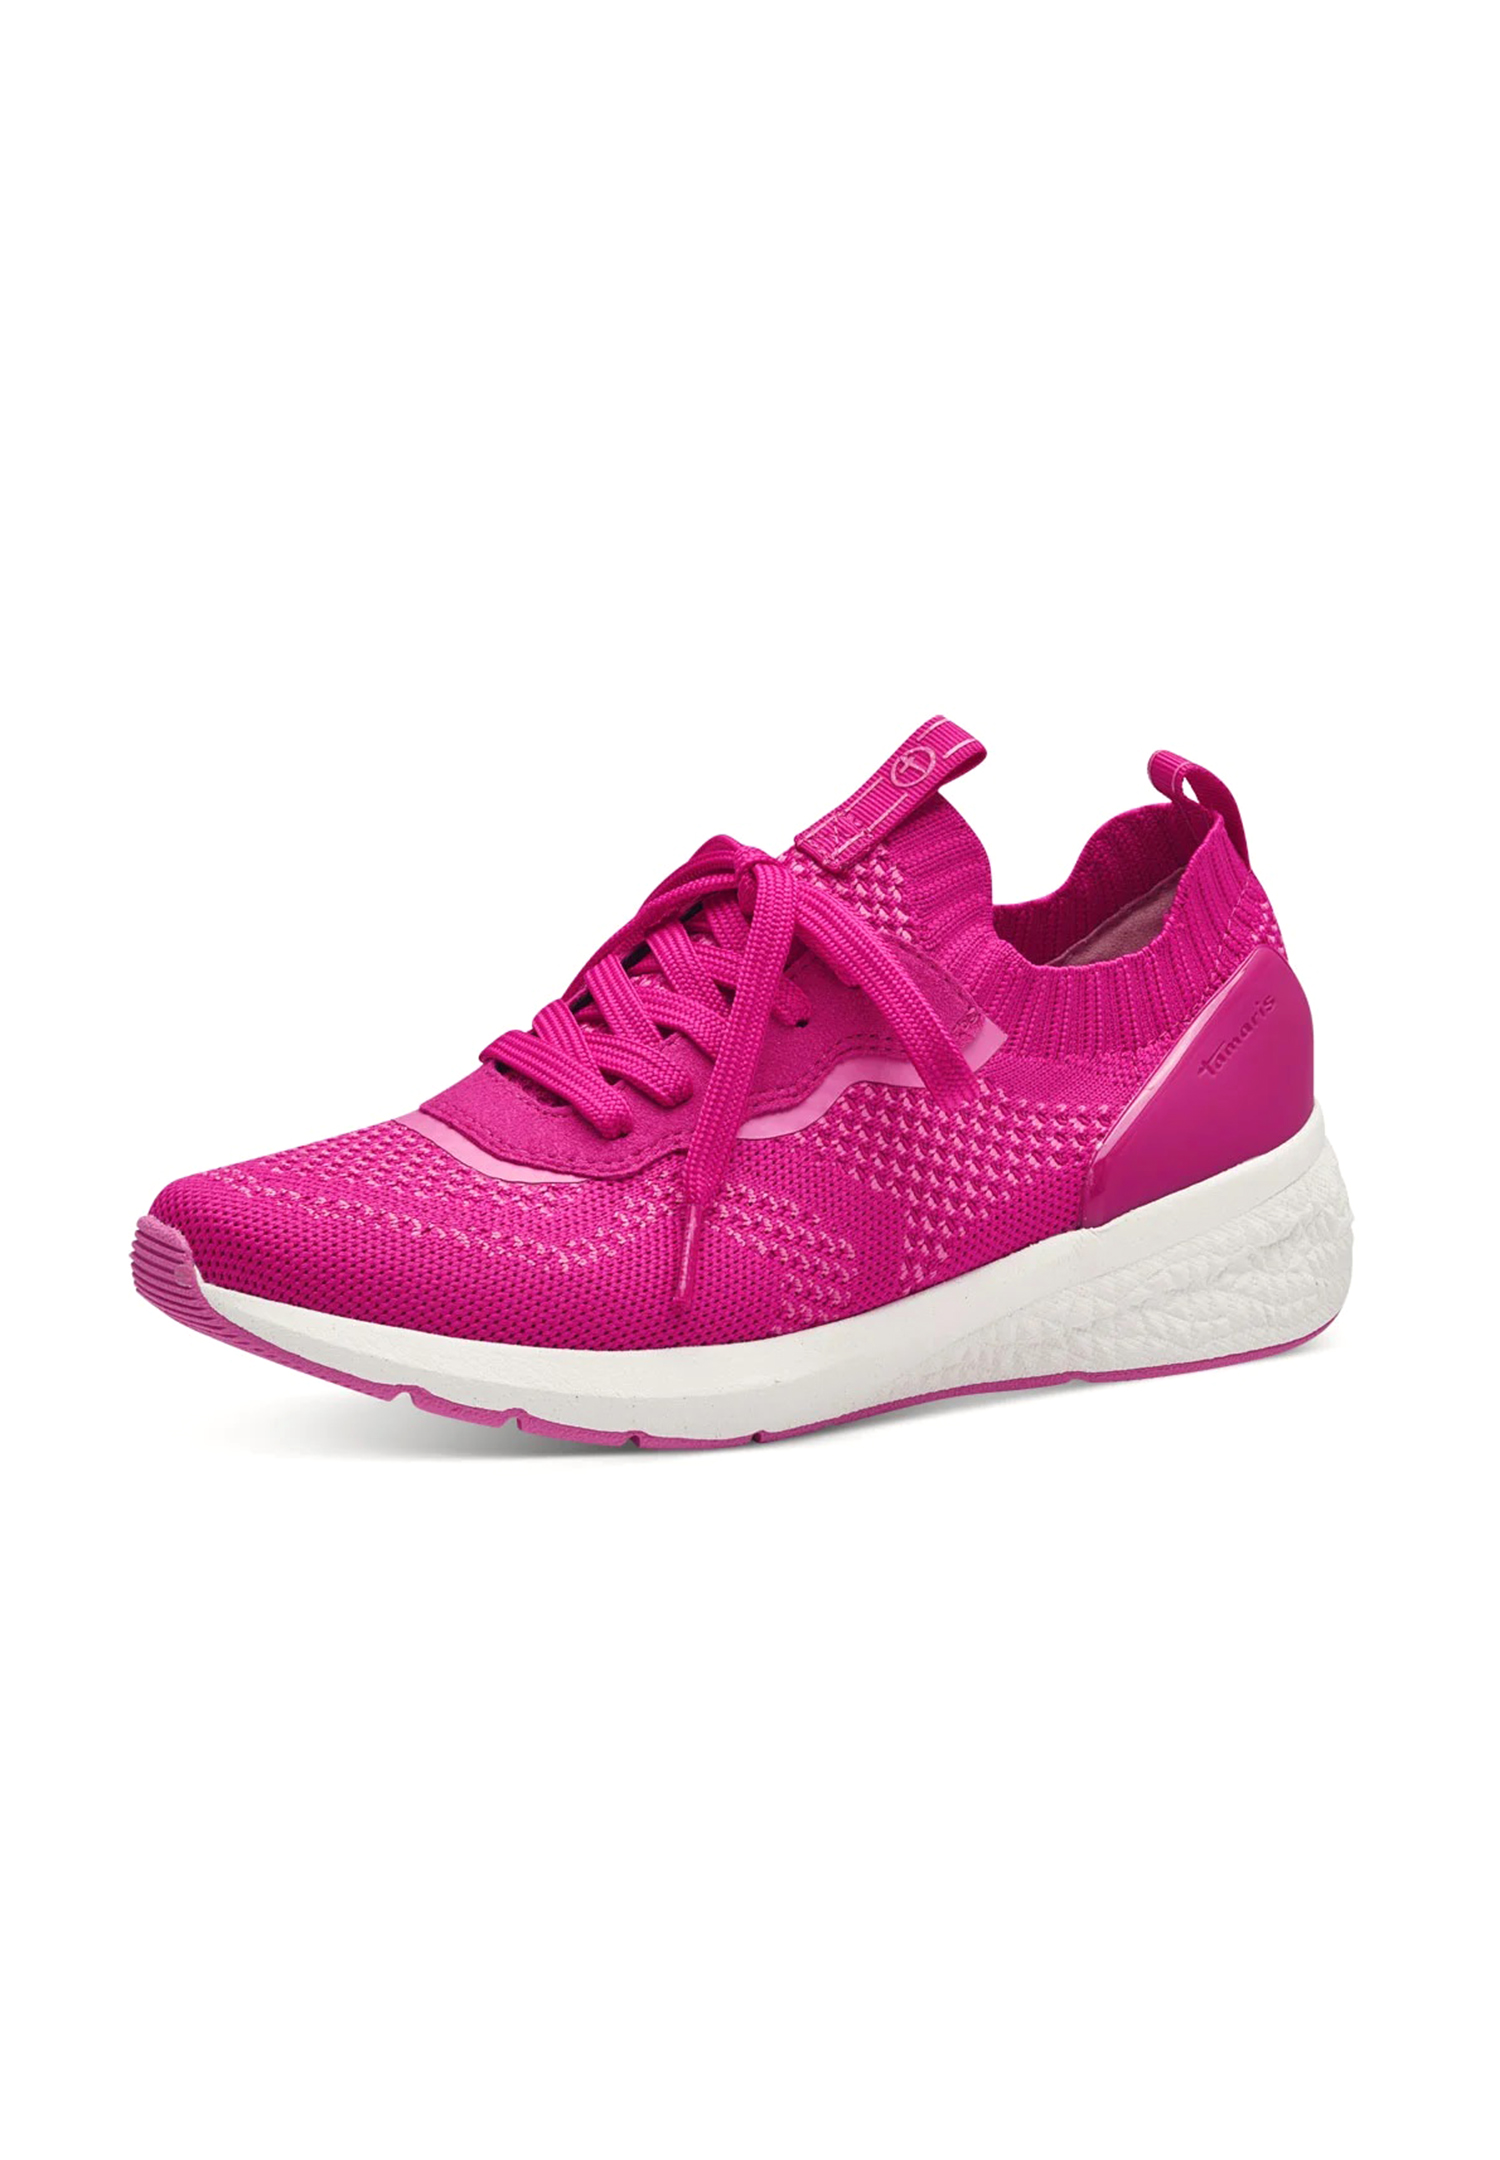 Tamaris Damen Low Top Sneaker  Frauen Schuhe Vegan M2373942 Pink 